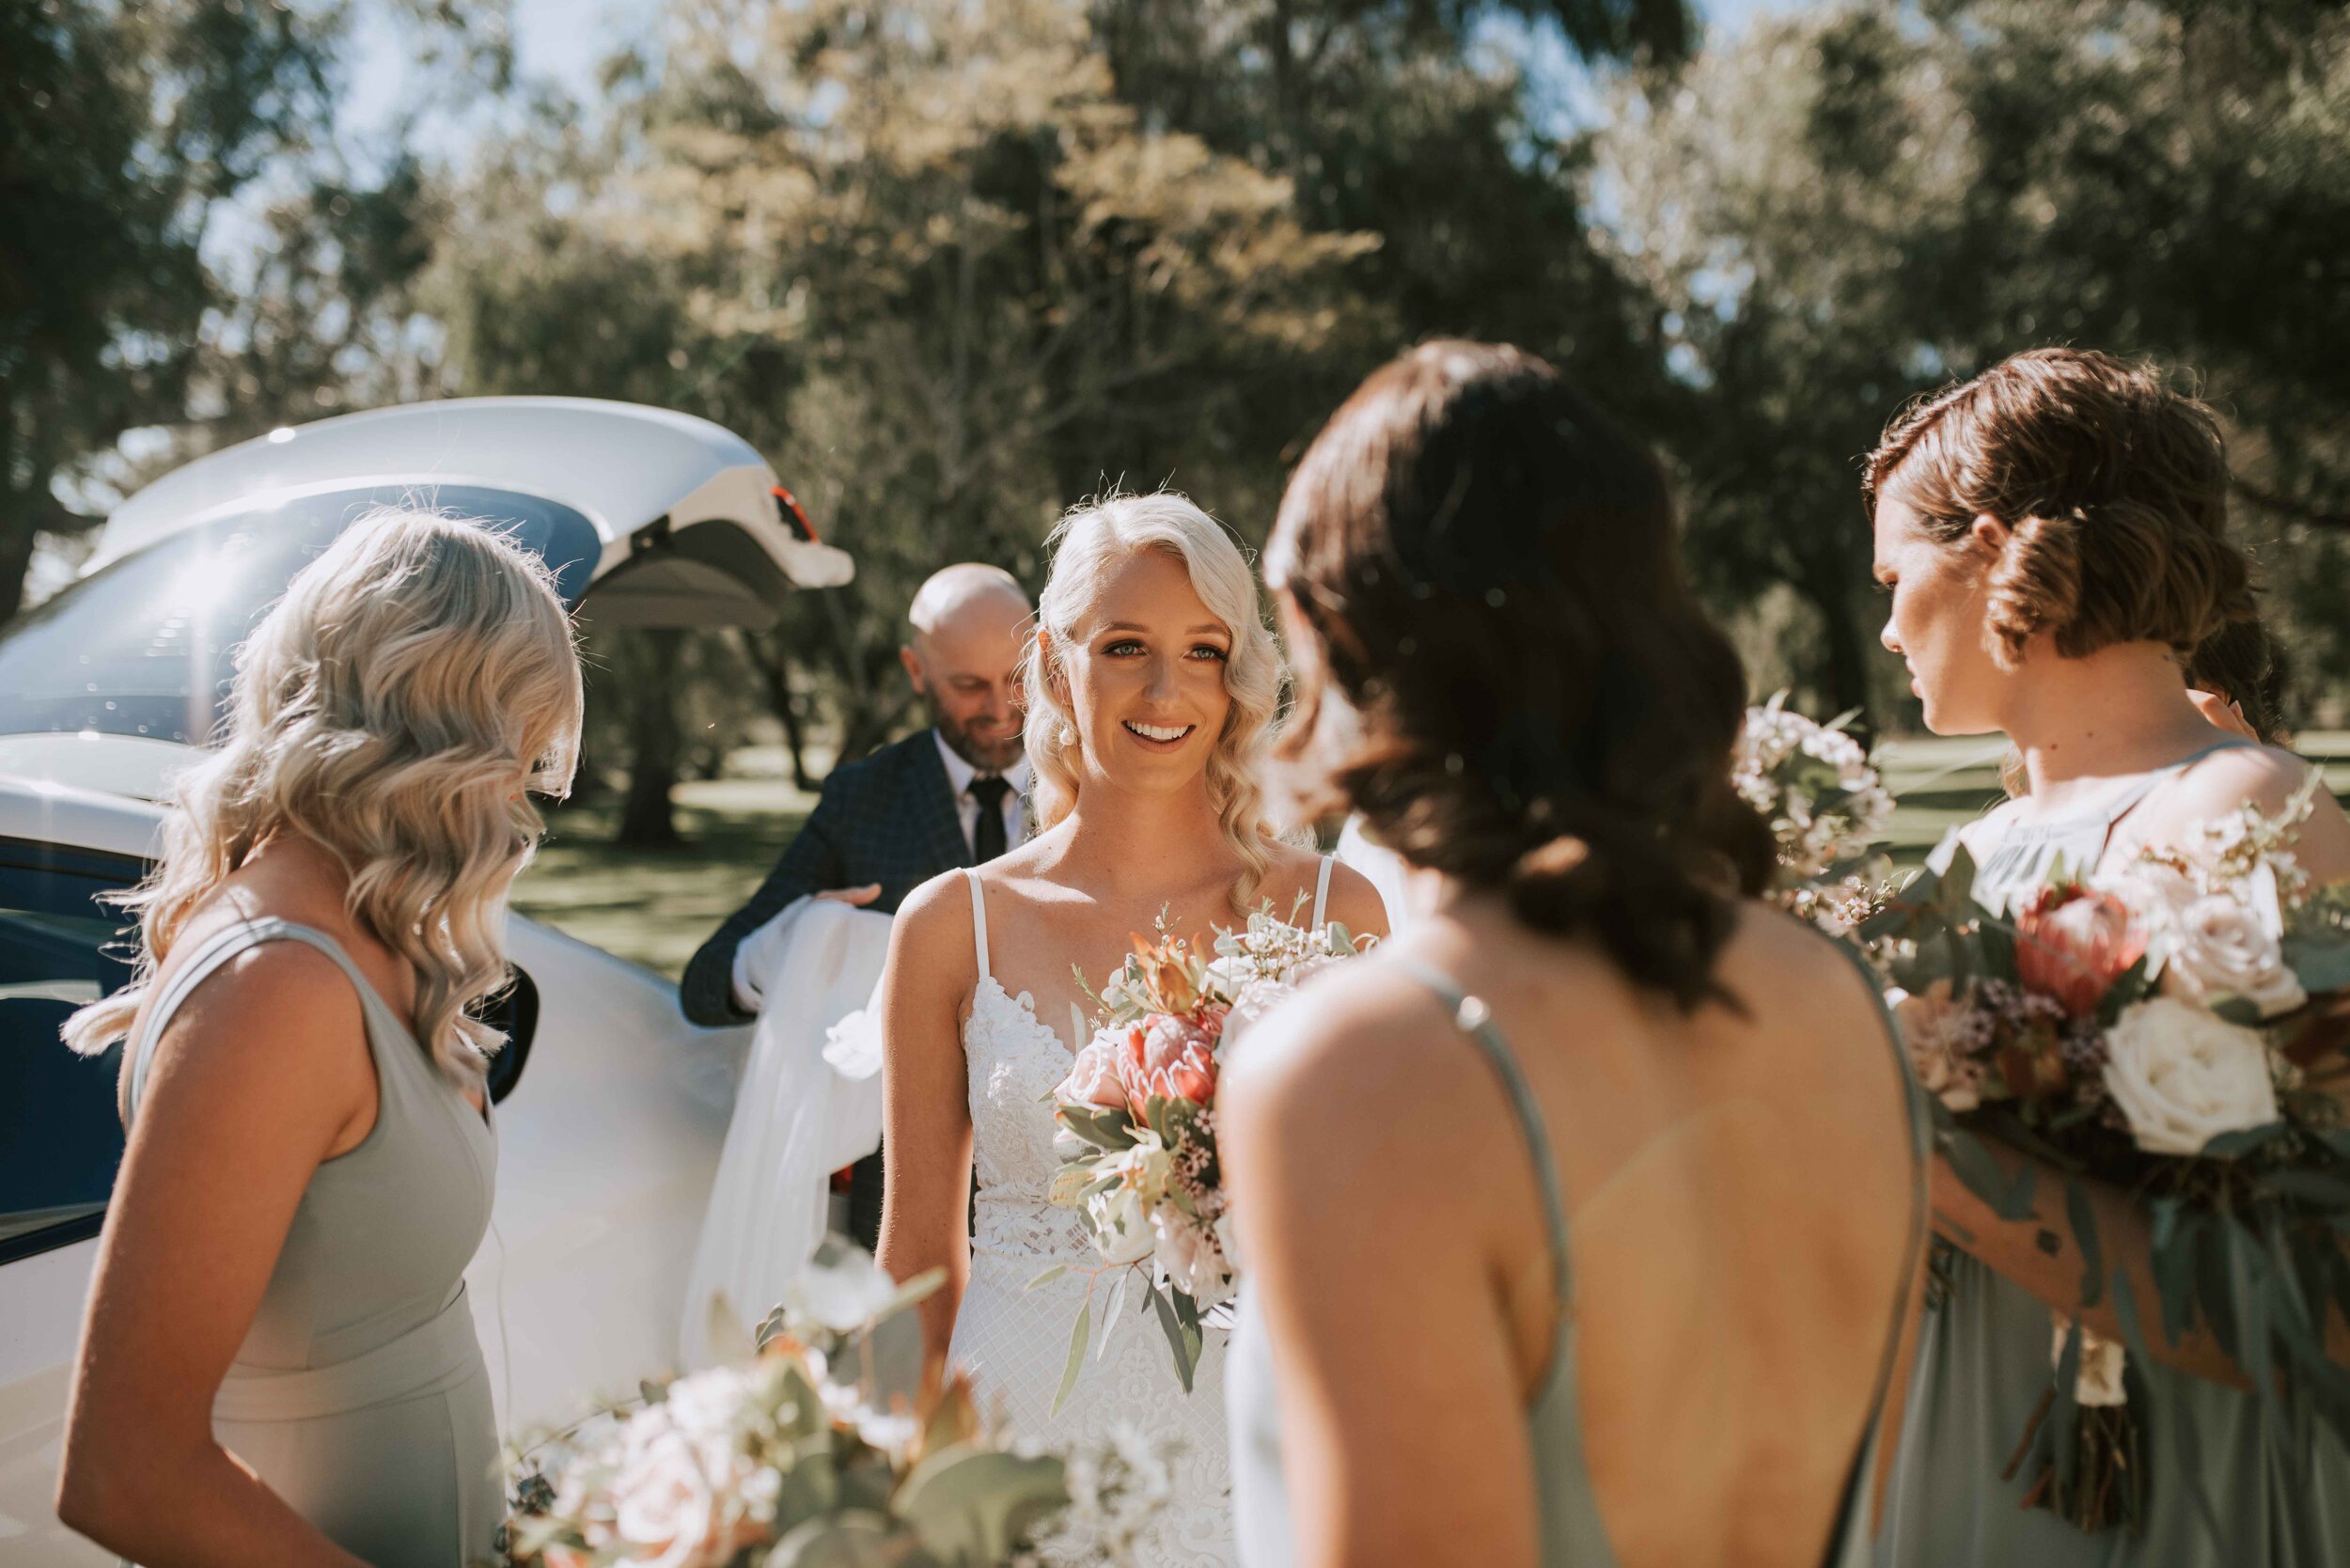 Yanchep park beautiful spring wedding | Perth wedding photographer Amy Skinner-297.jpg